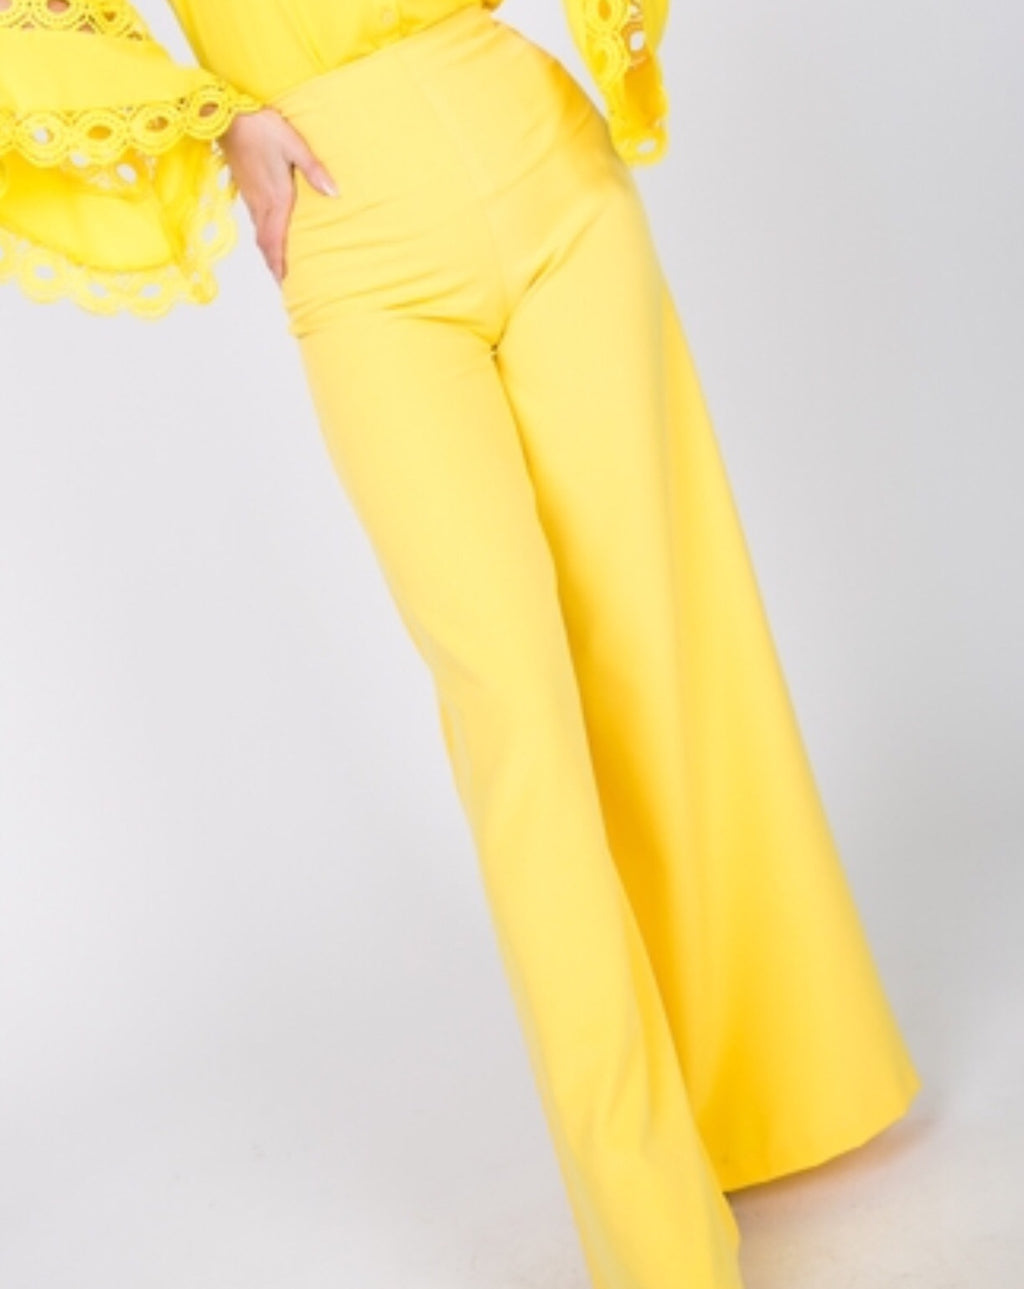 High-waisted yellow pants